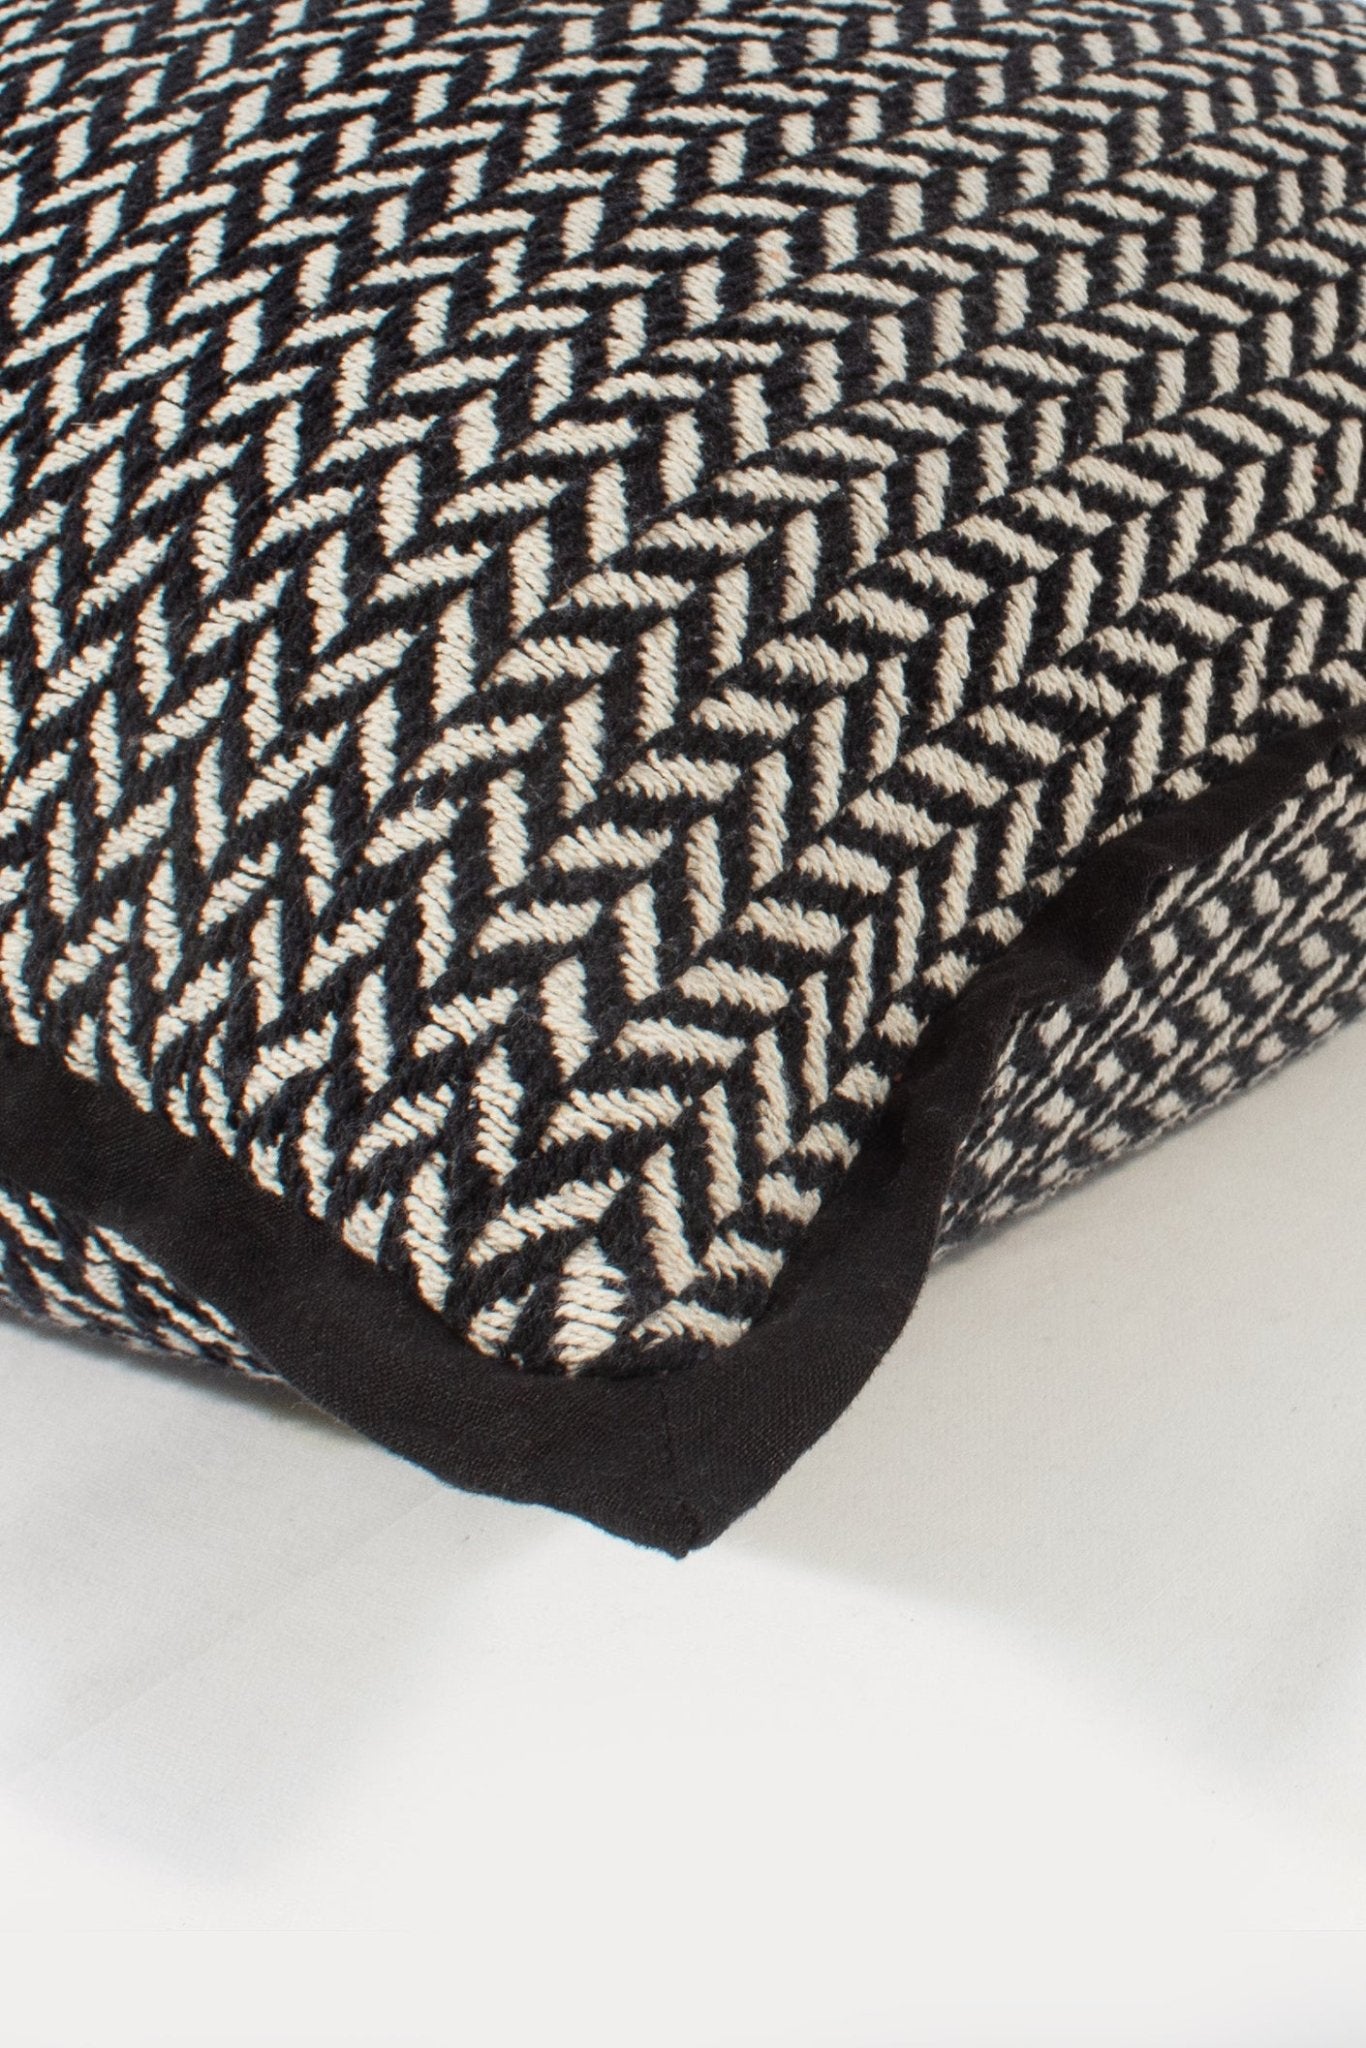 Black and White Herringbone Cotton Cushion Cover - Biggs & Hill - Cushion Covers - 45cm - 60cm - large cushion - handmade